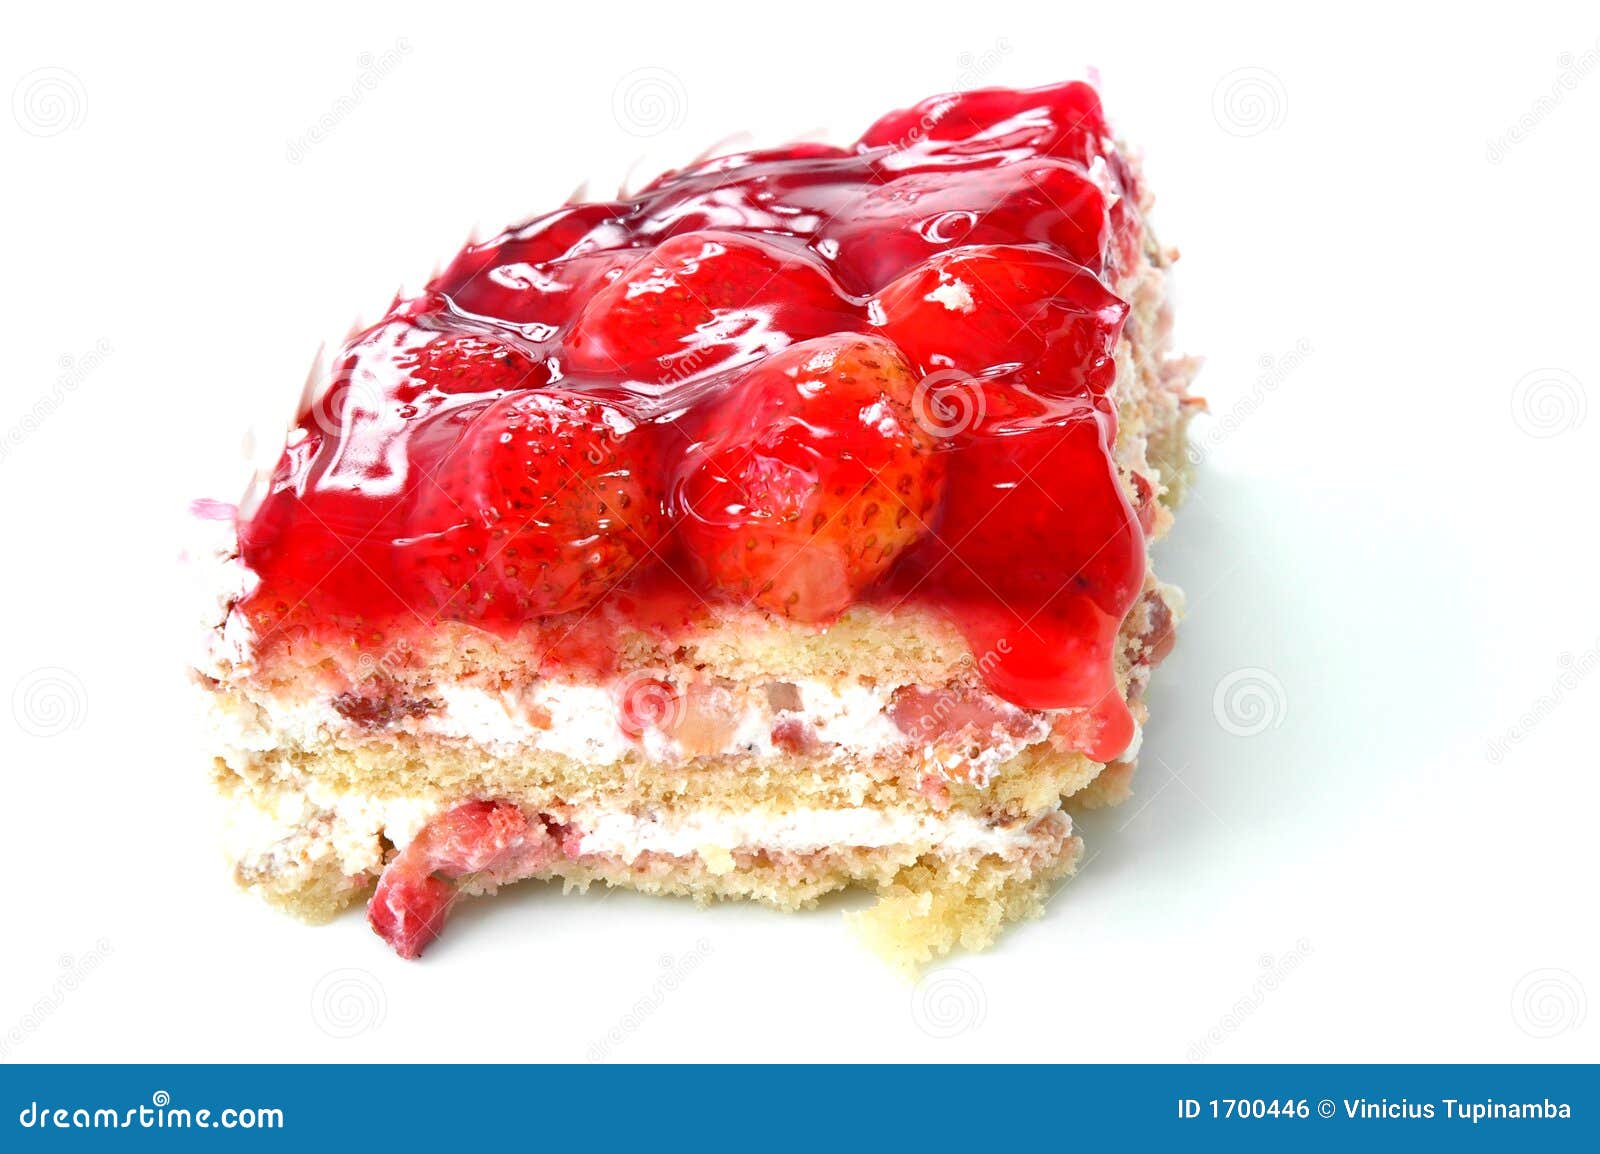 strawberry cake clipart - photo #39